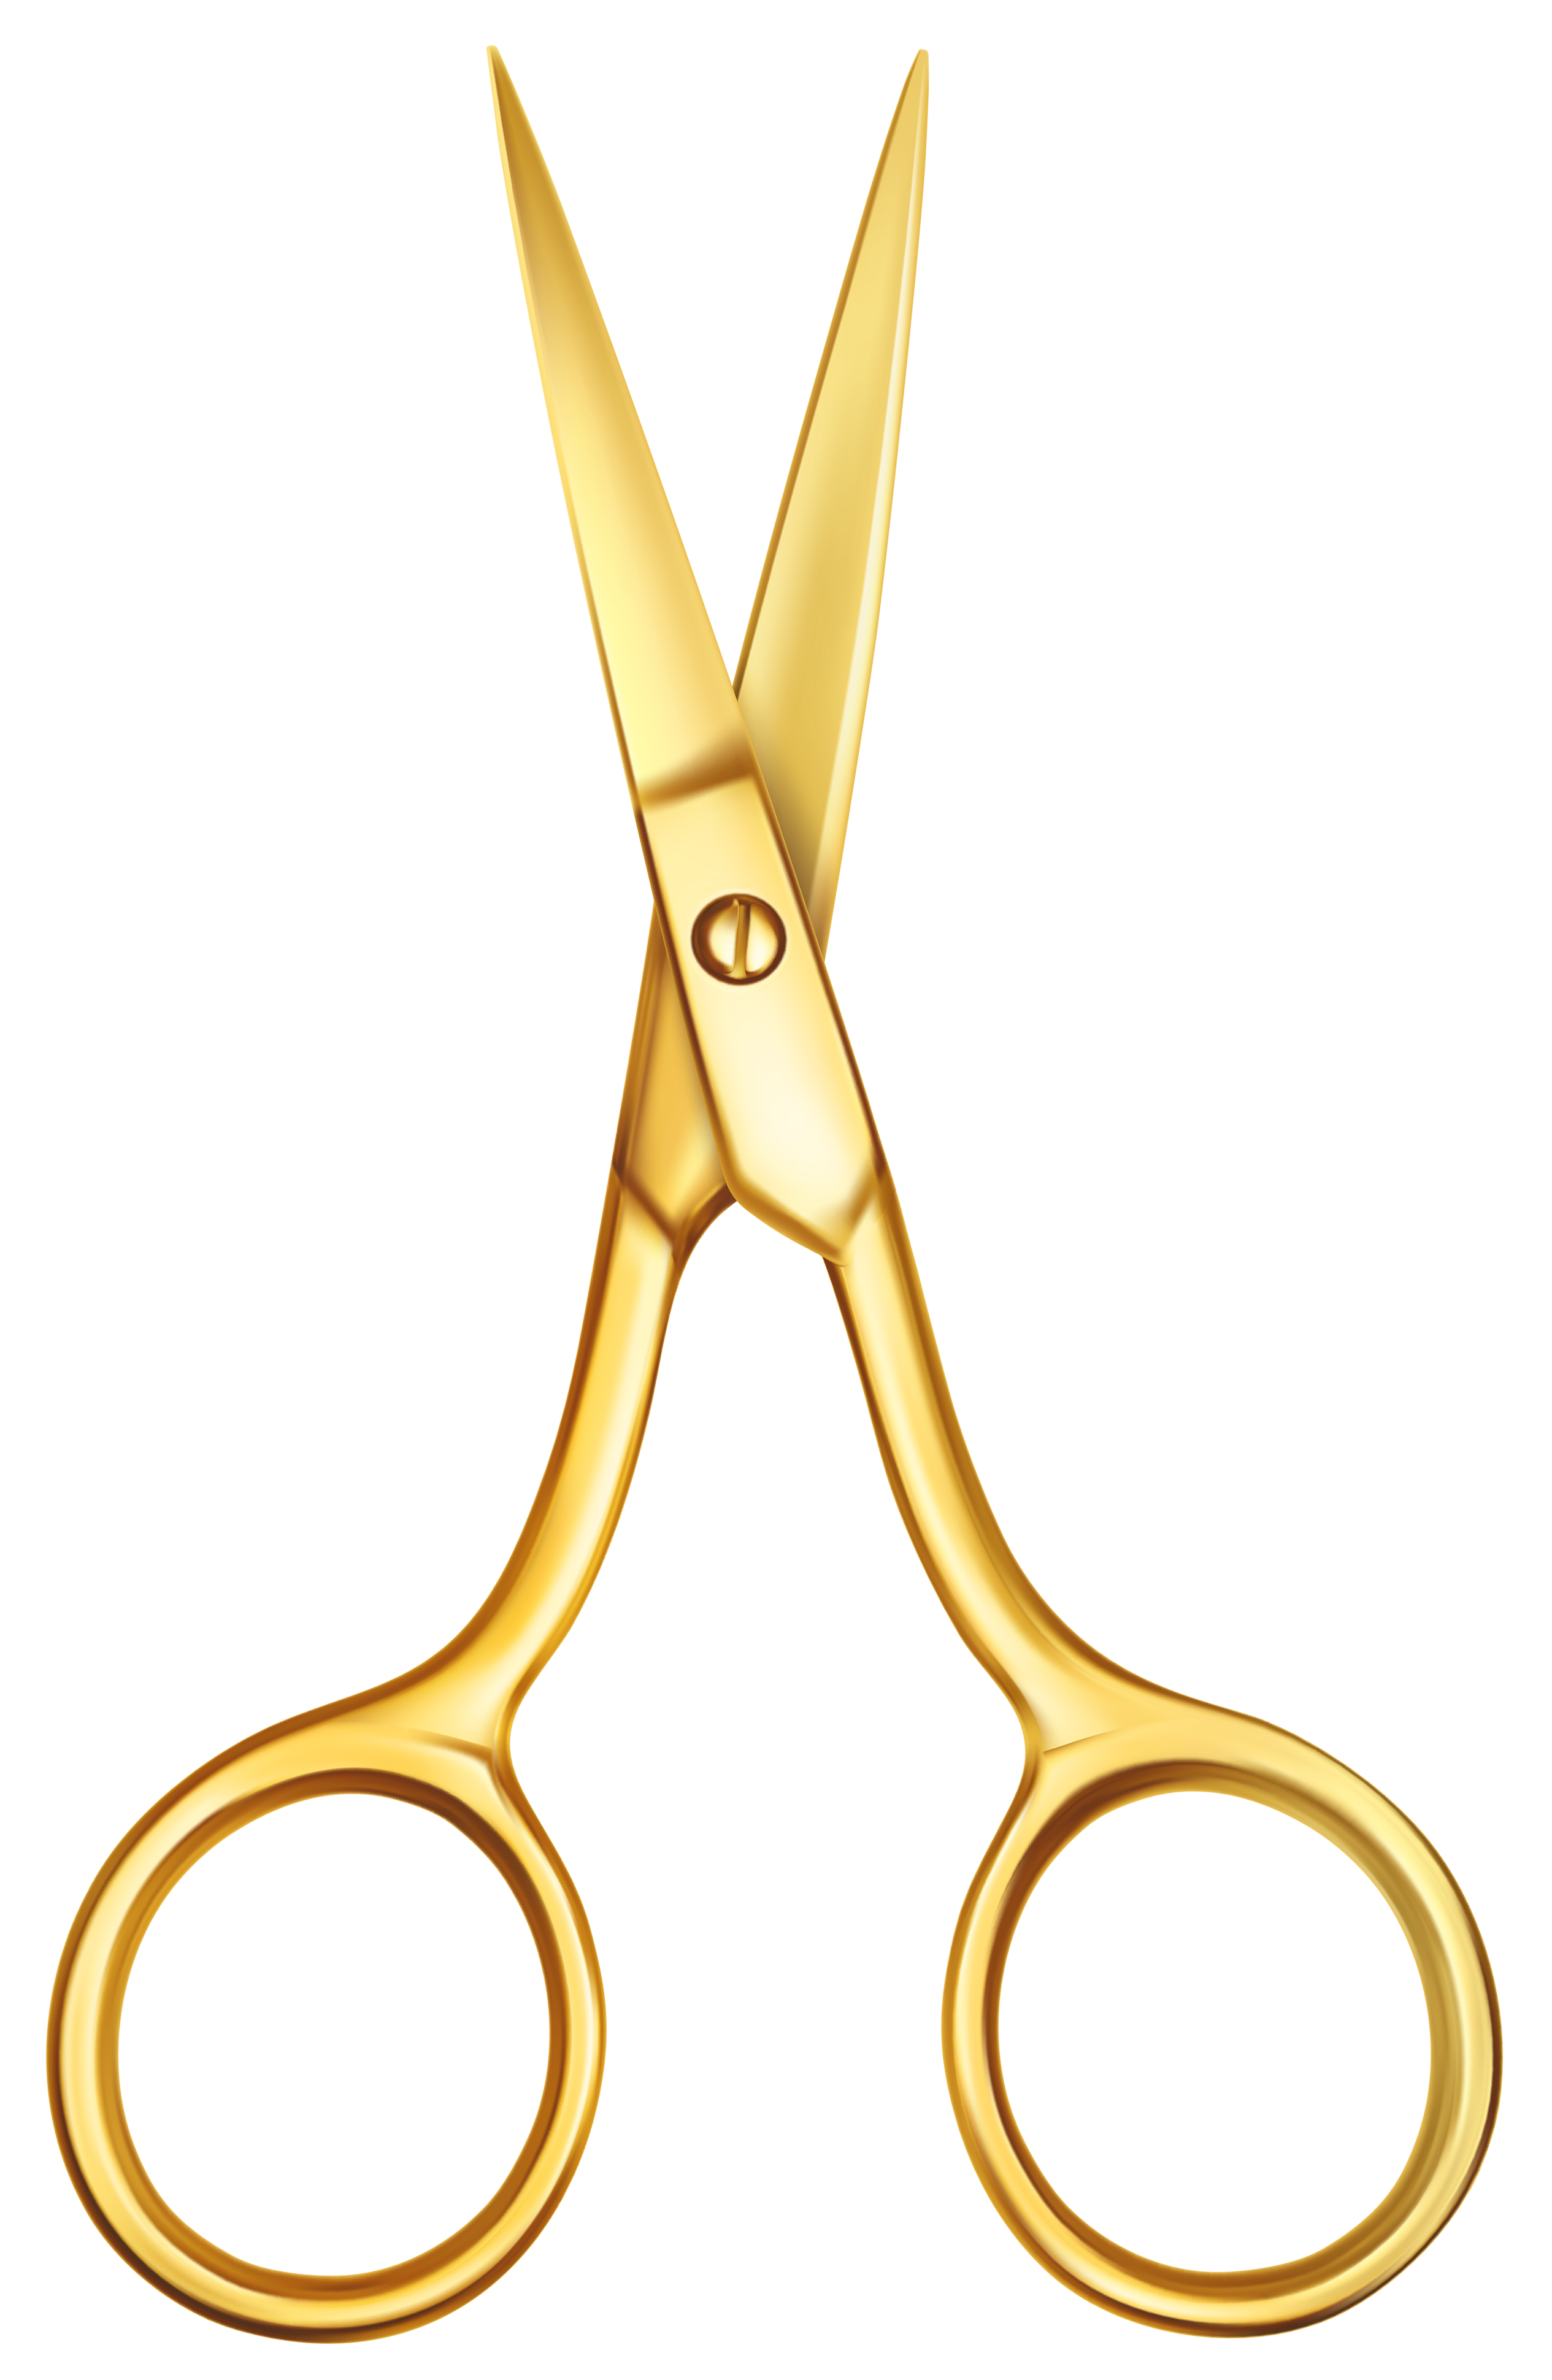 Gold Scissors PNG Clip Art Image.